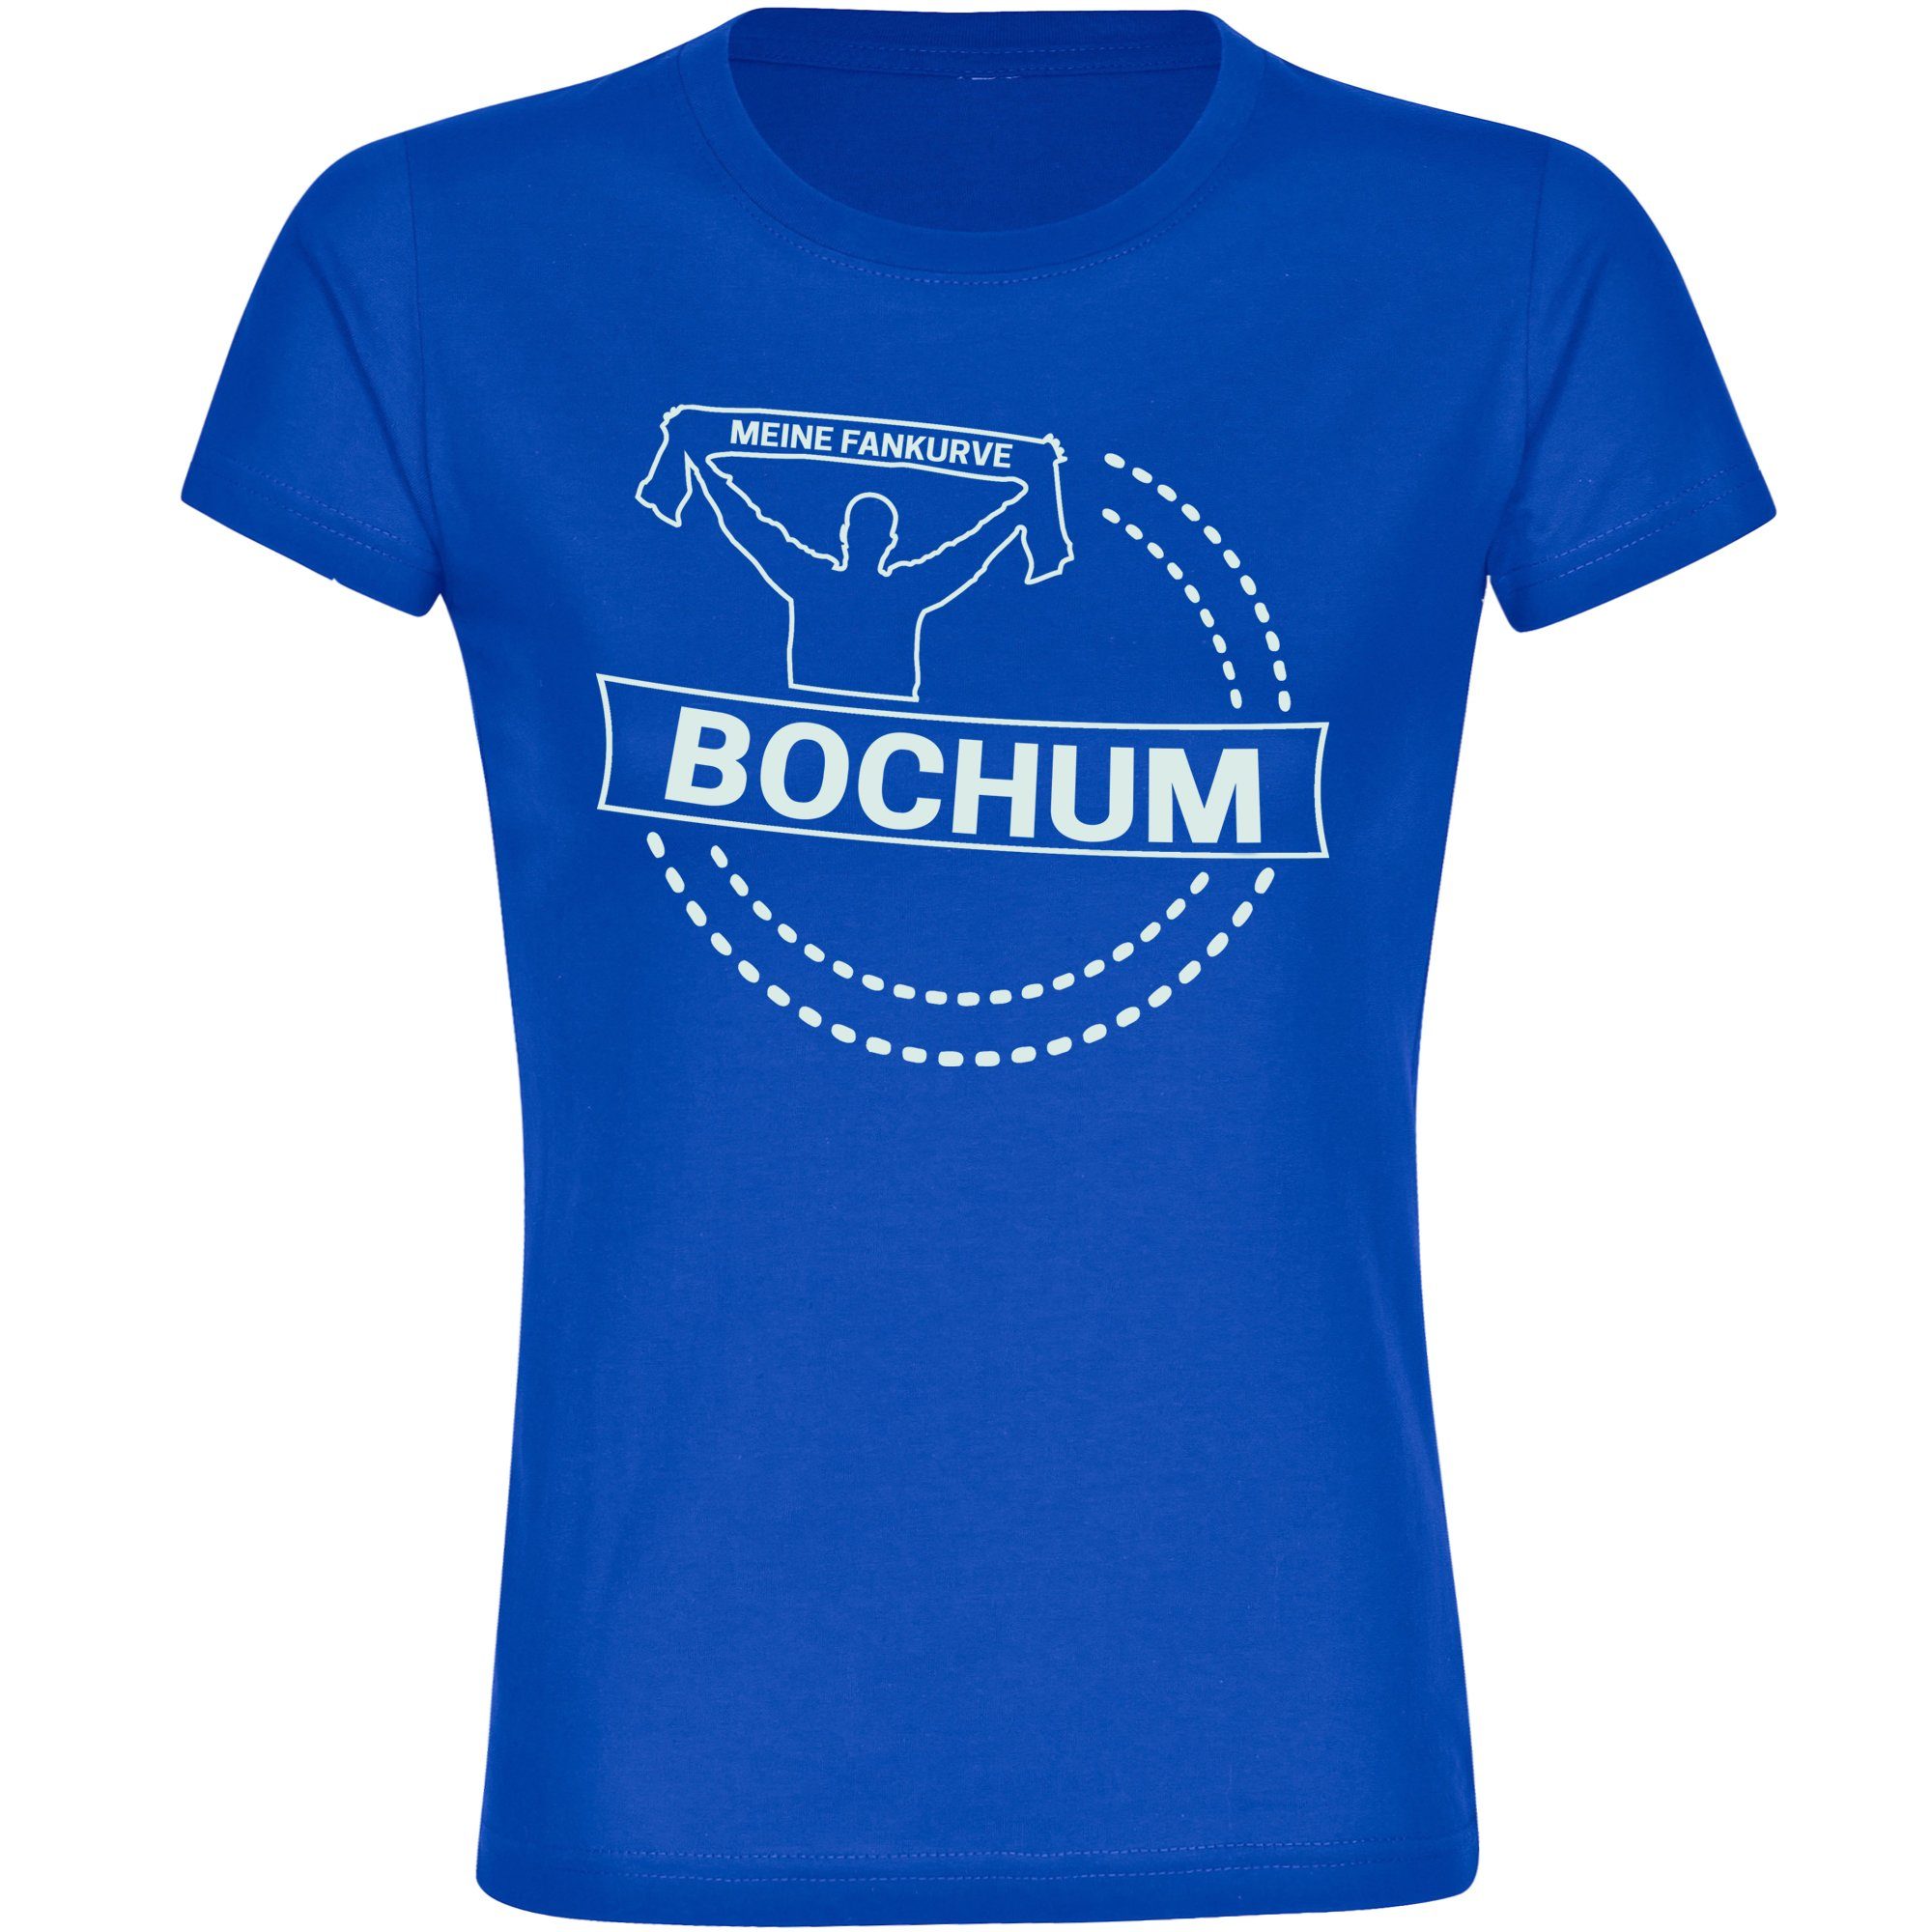 multifanshop T-Shirt Damen Bochum - Meine Fankurve - Frauen